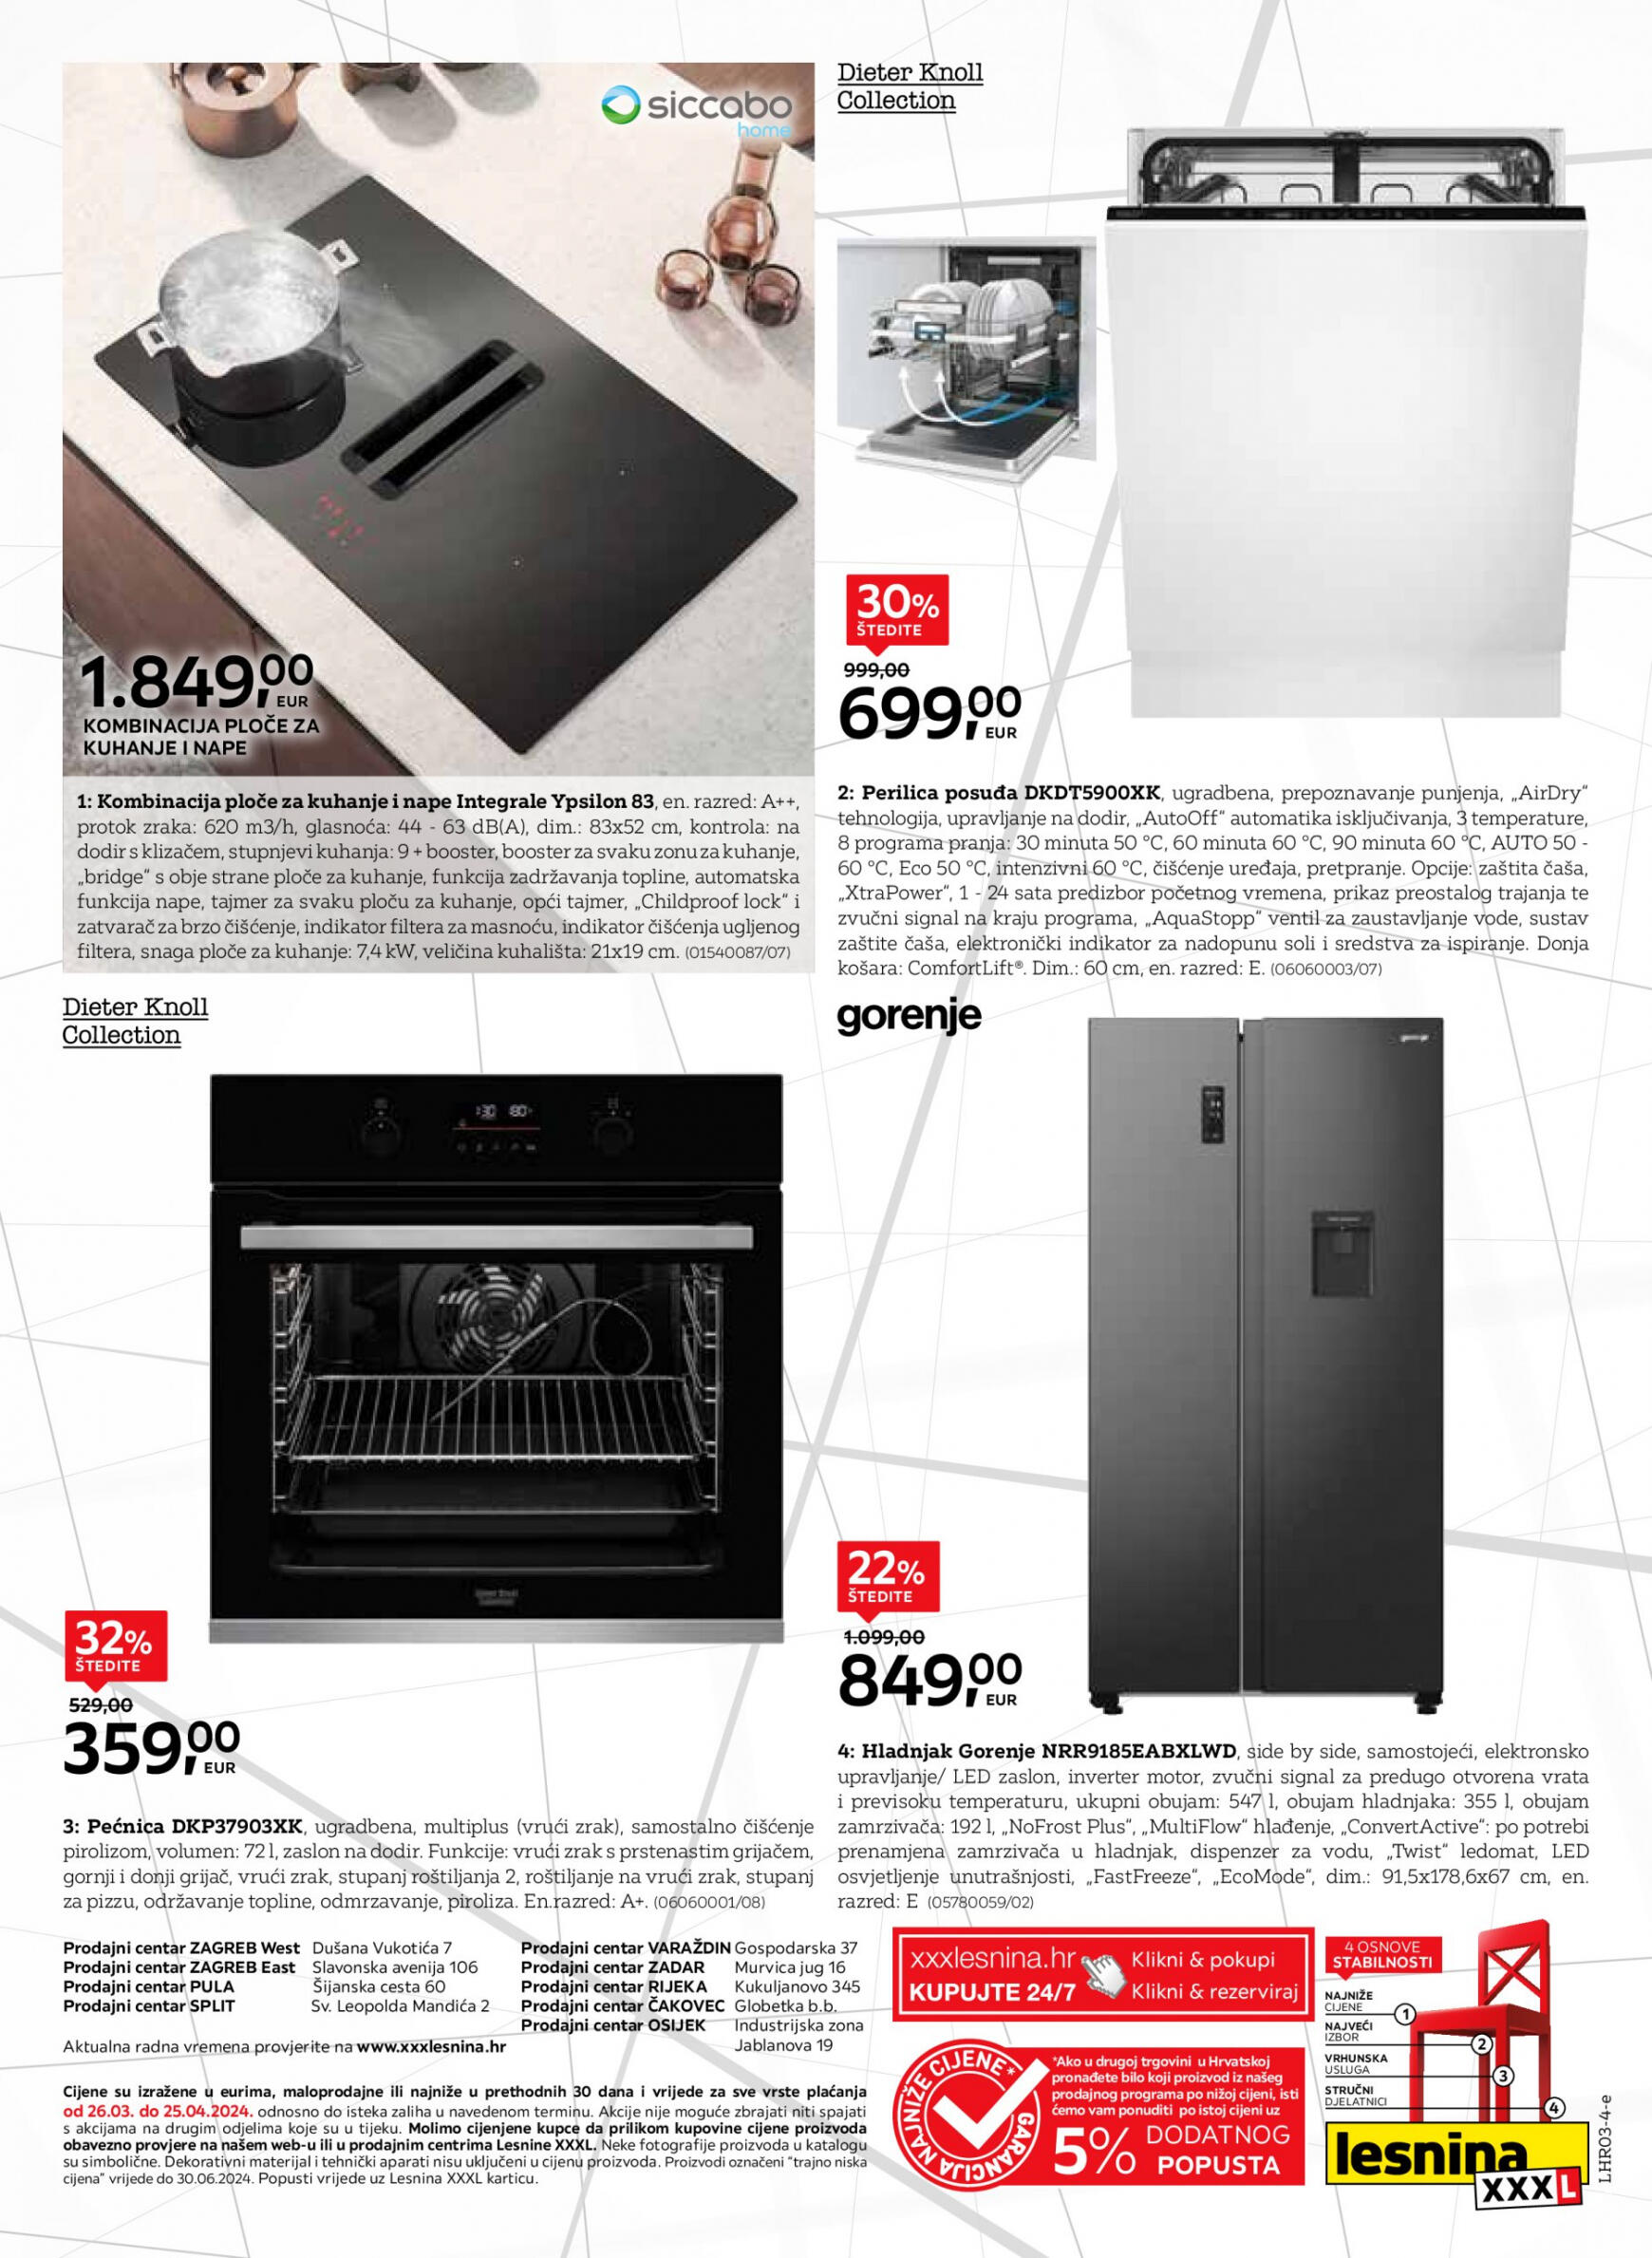 lesnina-xxxl - Novi katalog Lesnina XXXL - Super akcija kuhinja 26.03. - 25.04. - page: 8